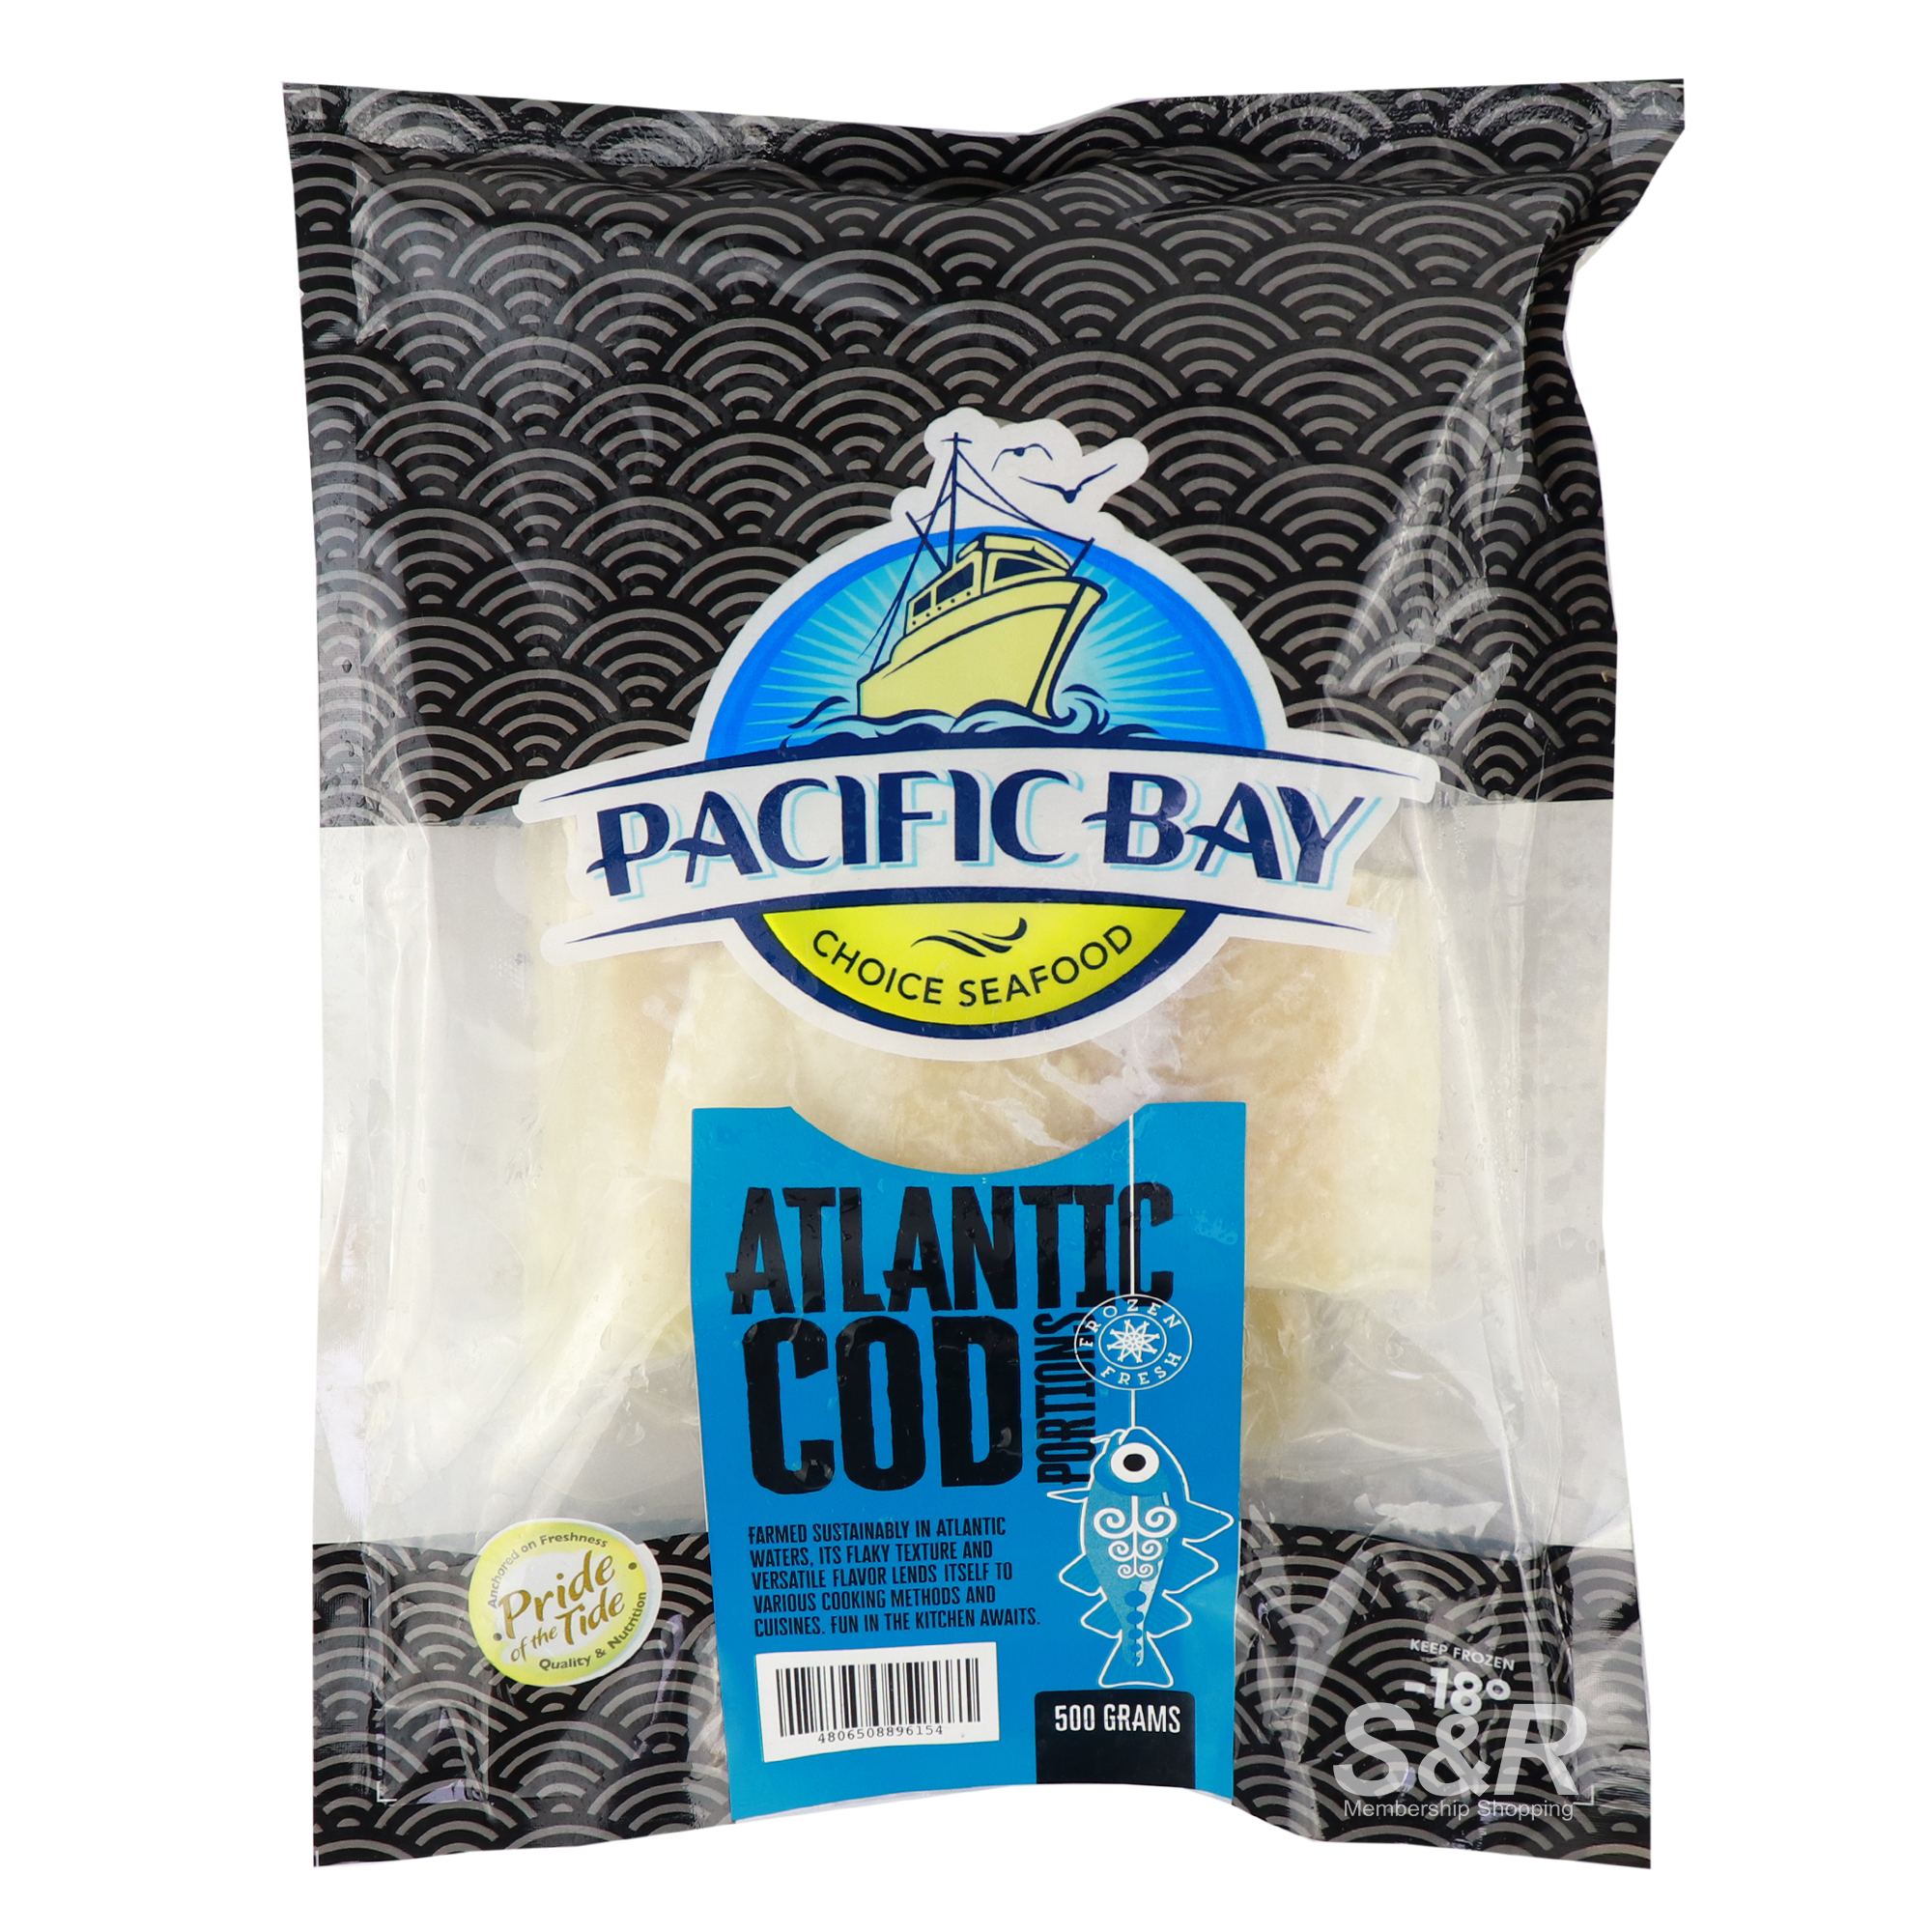 Pacific Bay Atlantic Cod Portions 500g